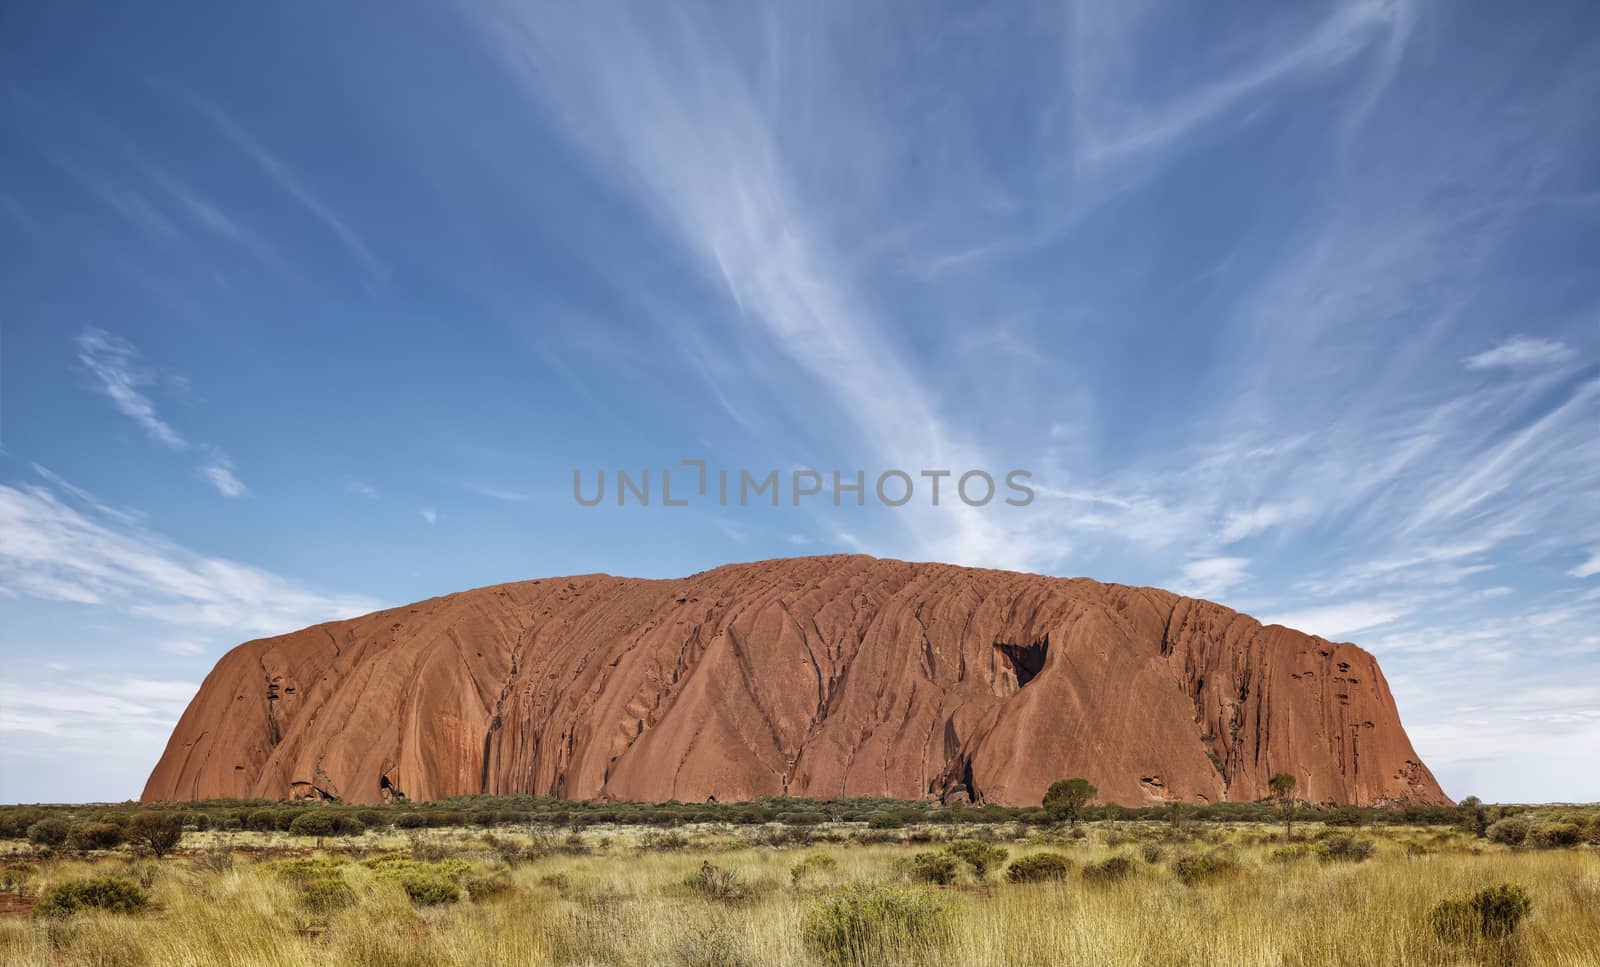 Uluru. formerly Ayer's Rock. Is a large sandstone rock formation located in Uluru-Kata Tjuta National Park, Northern Territory, Australia